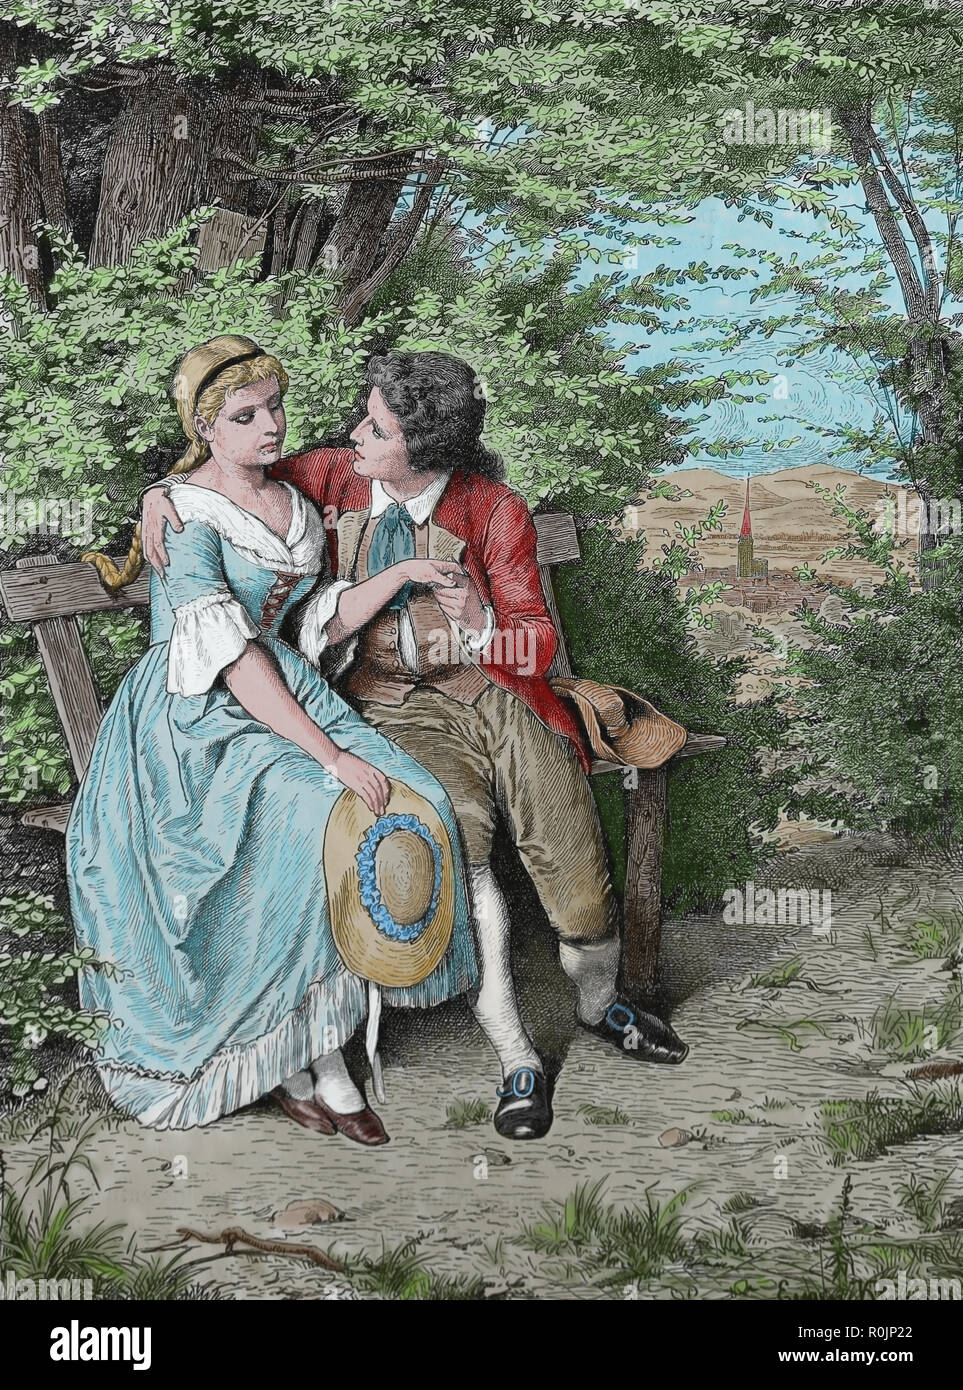 Scrittore tedesco Johann Wolfgang von Goethe (Francoforte sul Meno 1749 - Weimar 1832) con Friederike Brion (1752-1813). Engravin di germanio, 1882. Foto Stock